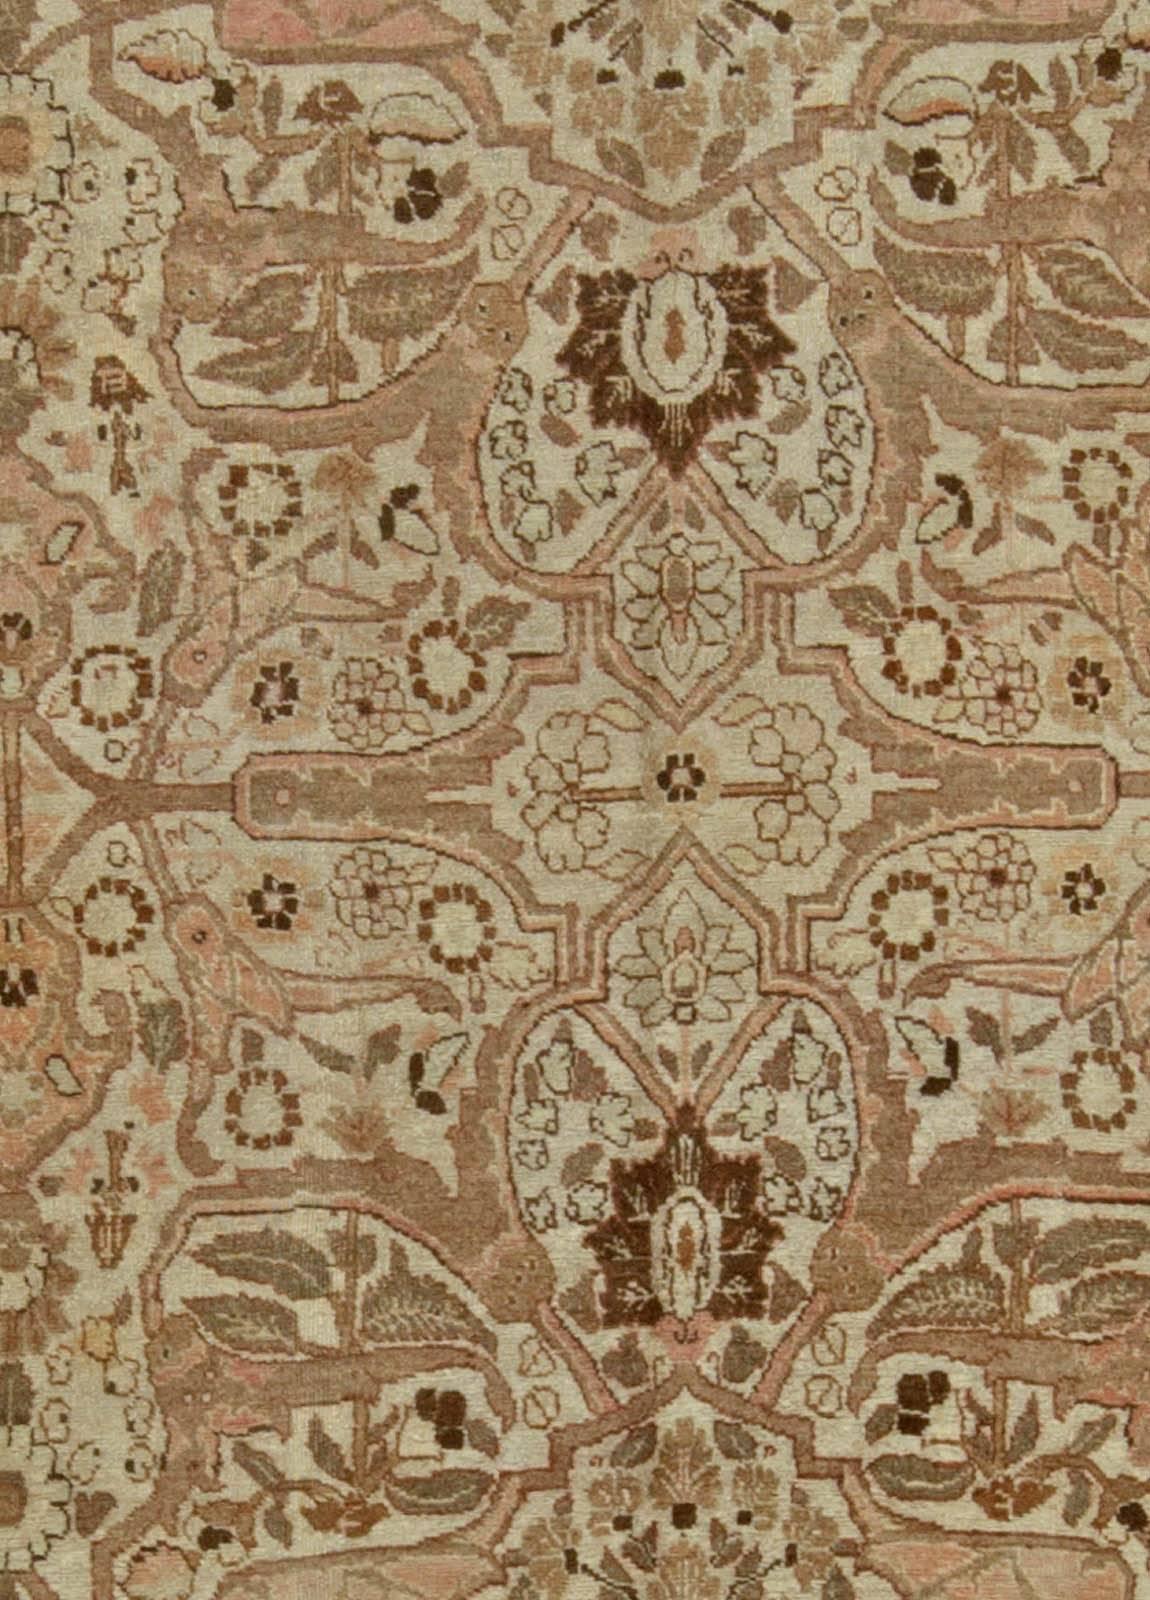 Authentic Persian Tabriz brown handmade wool rug
Size: 9'2